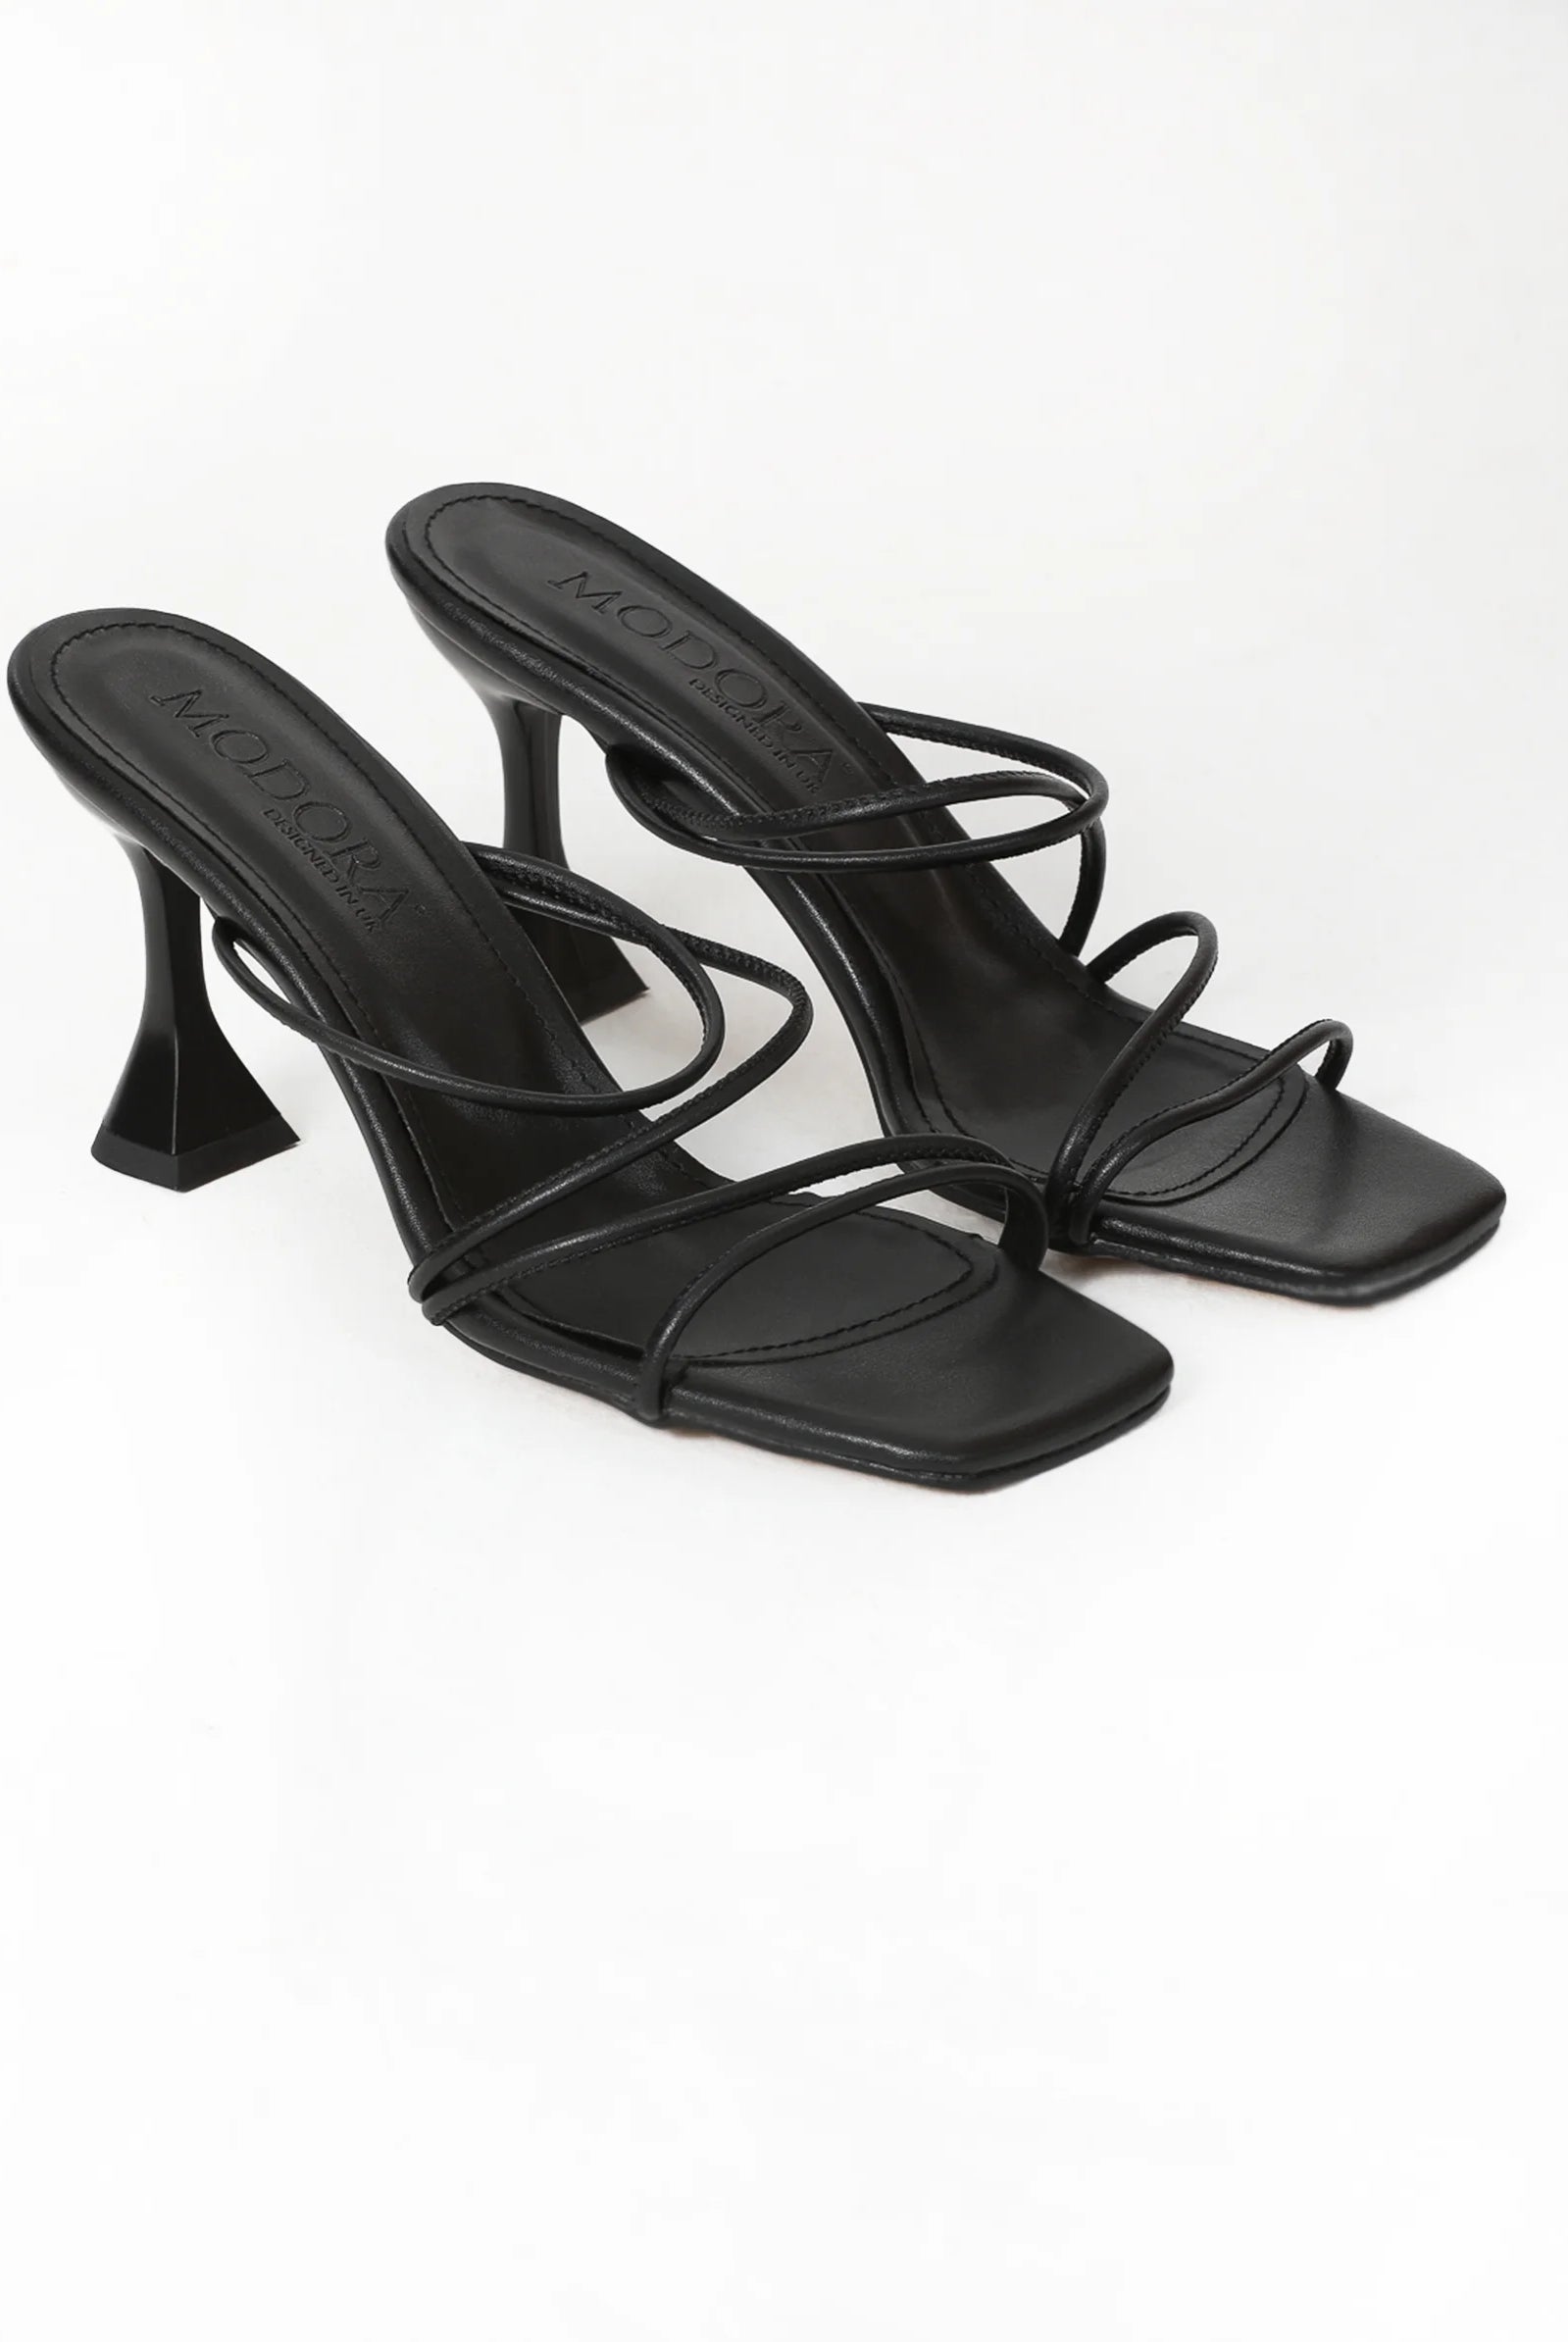 strappy black heels uk